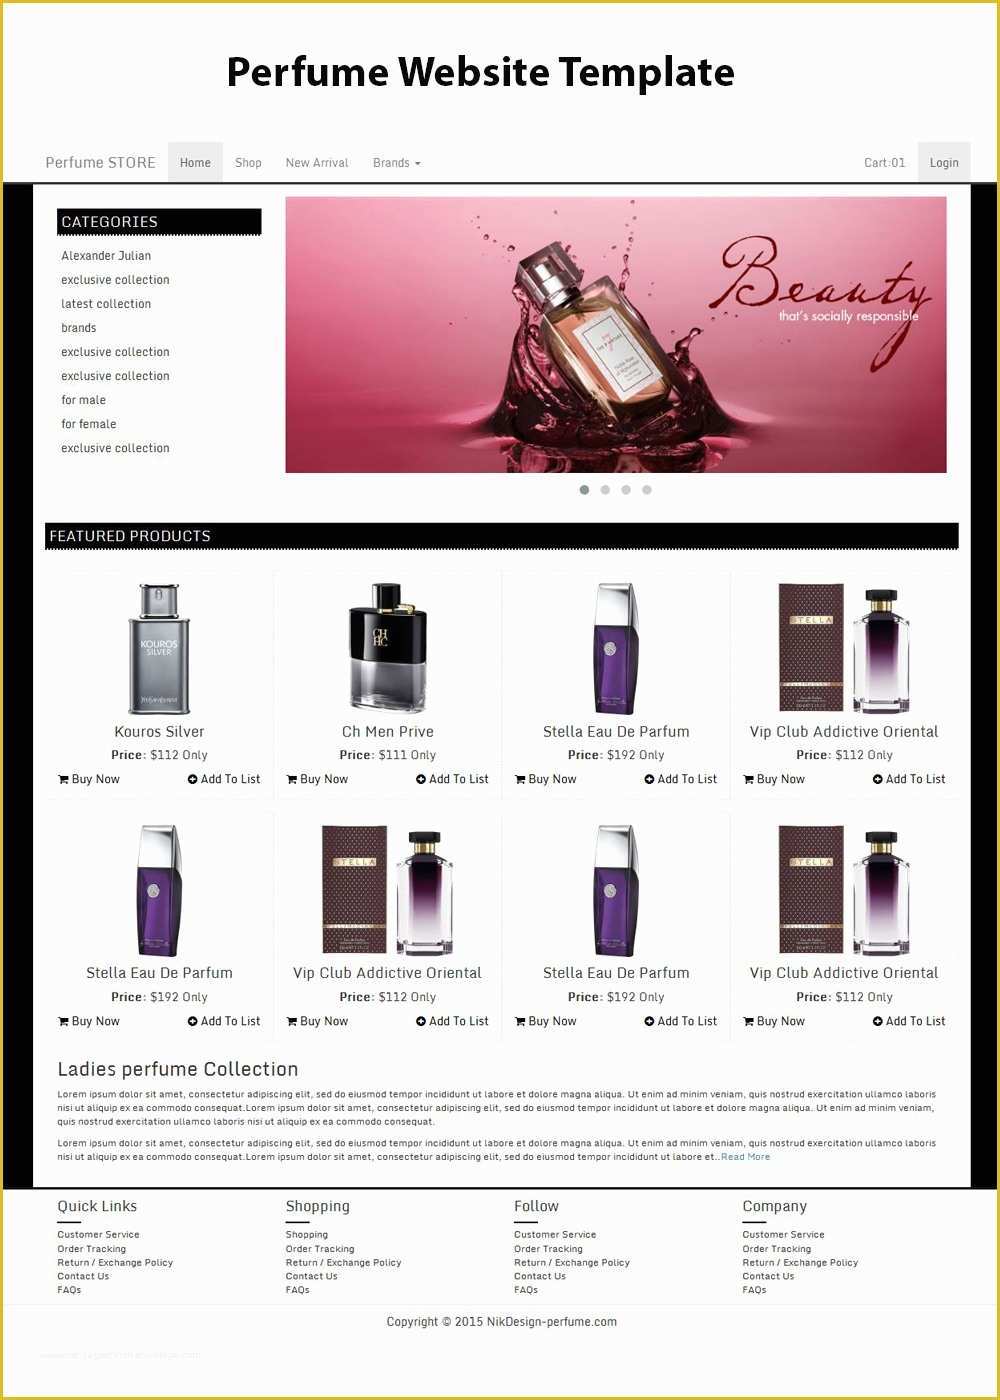 Alumni association Website Templates Free Download Of Free Perfume Template